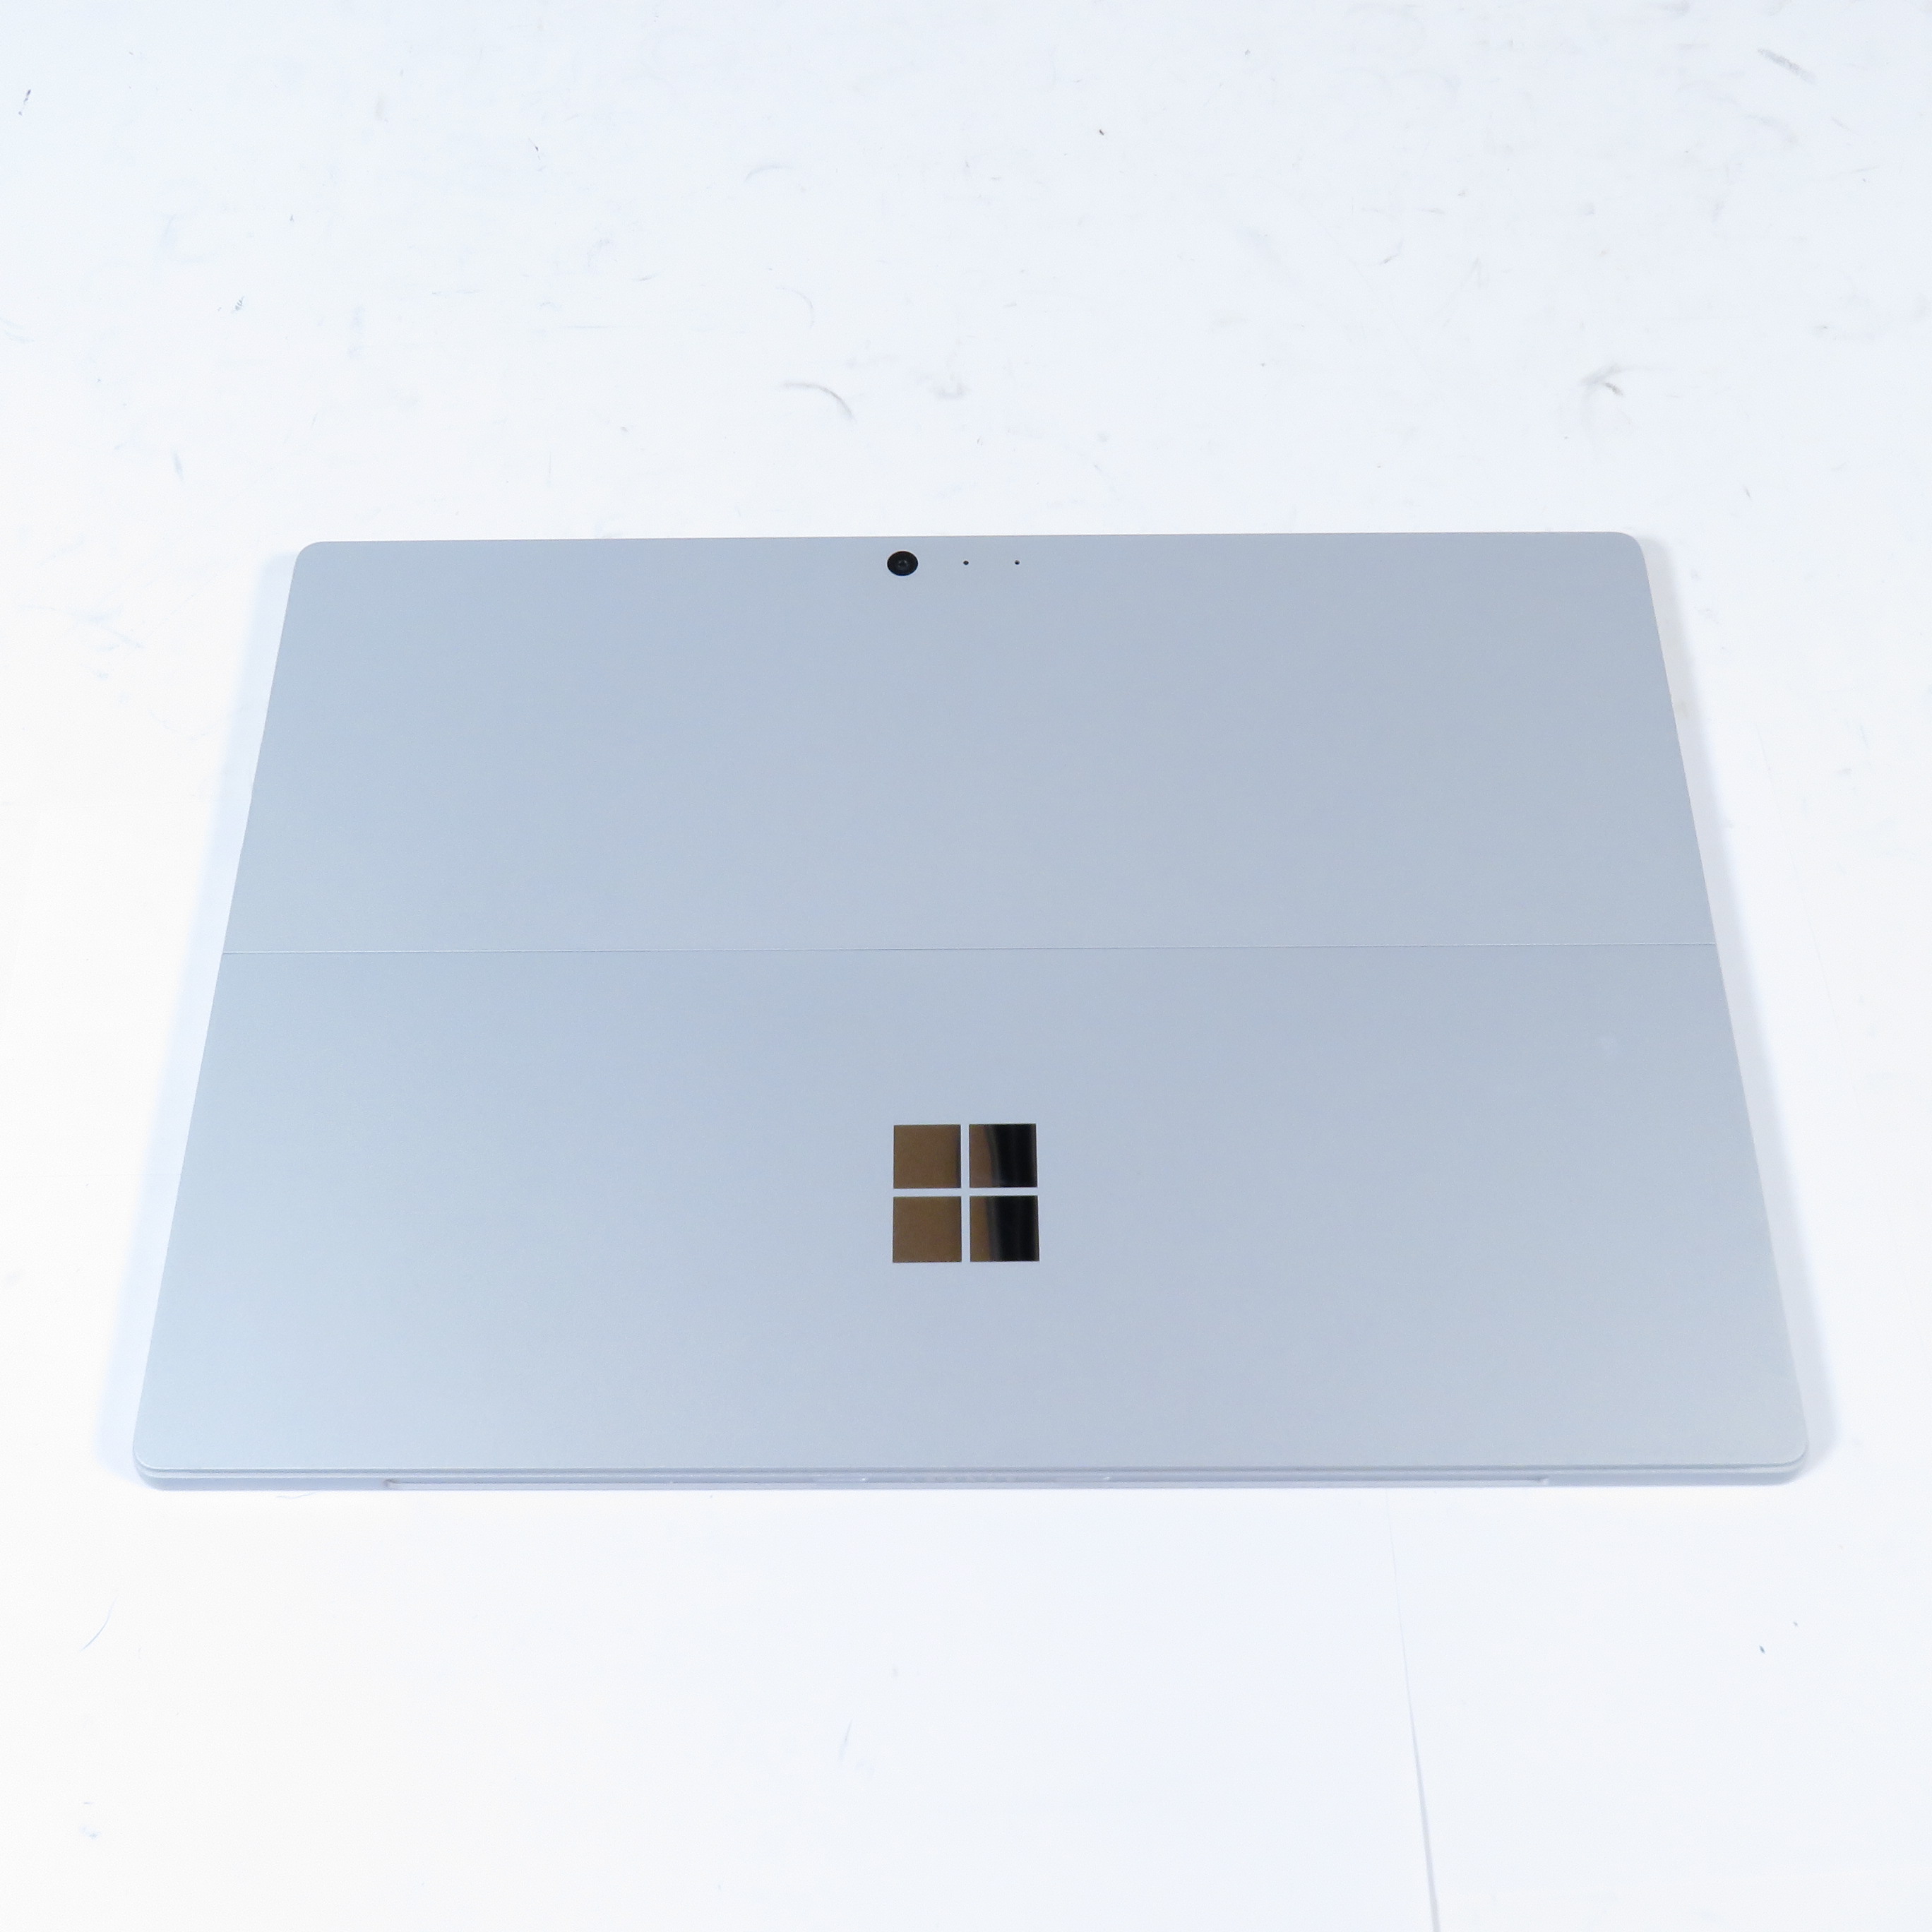 Microsoft Surface Pro 5 - Core m3 1GHz, 4GB RAM, 128GB SSD (Renewed)